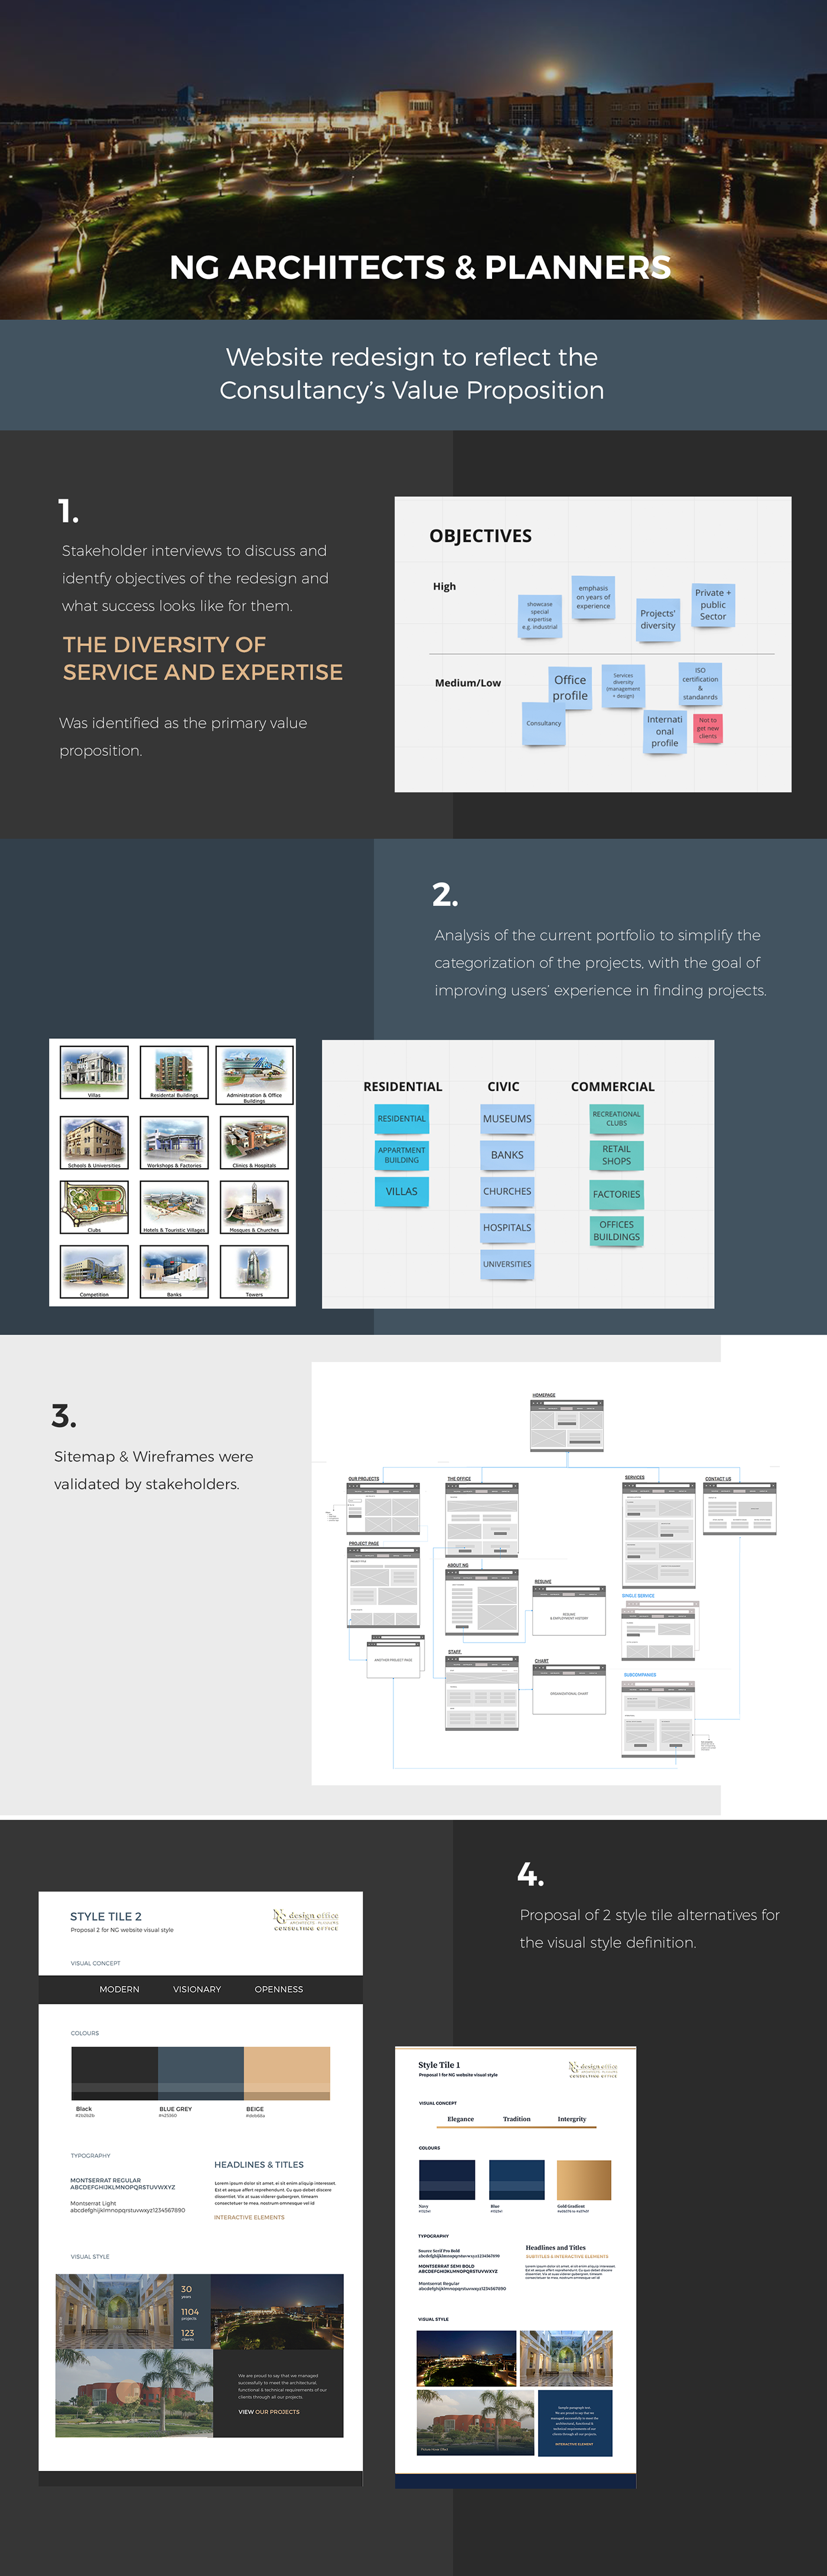 Webdesign interfacedesign architecture Website informationarchitecture branding  consultancy userinteraction